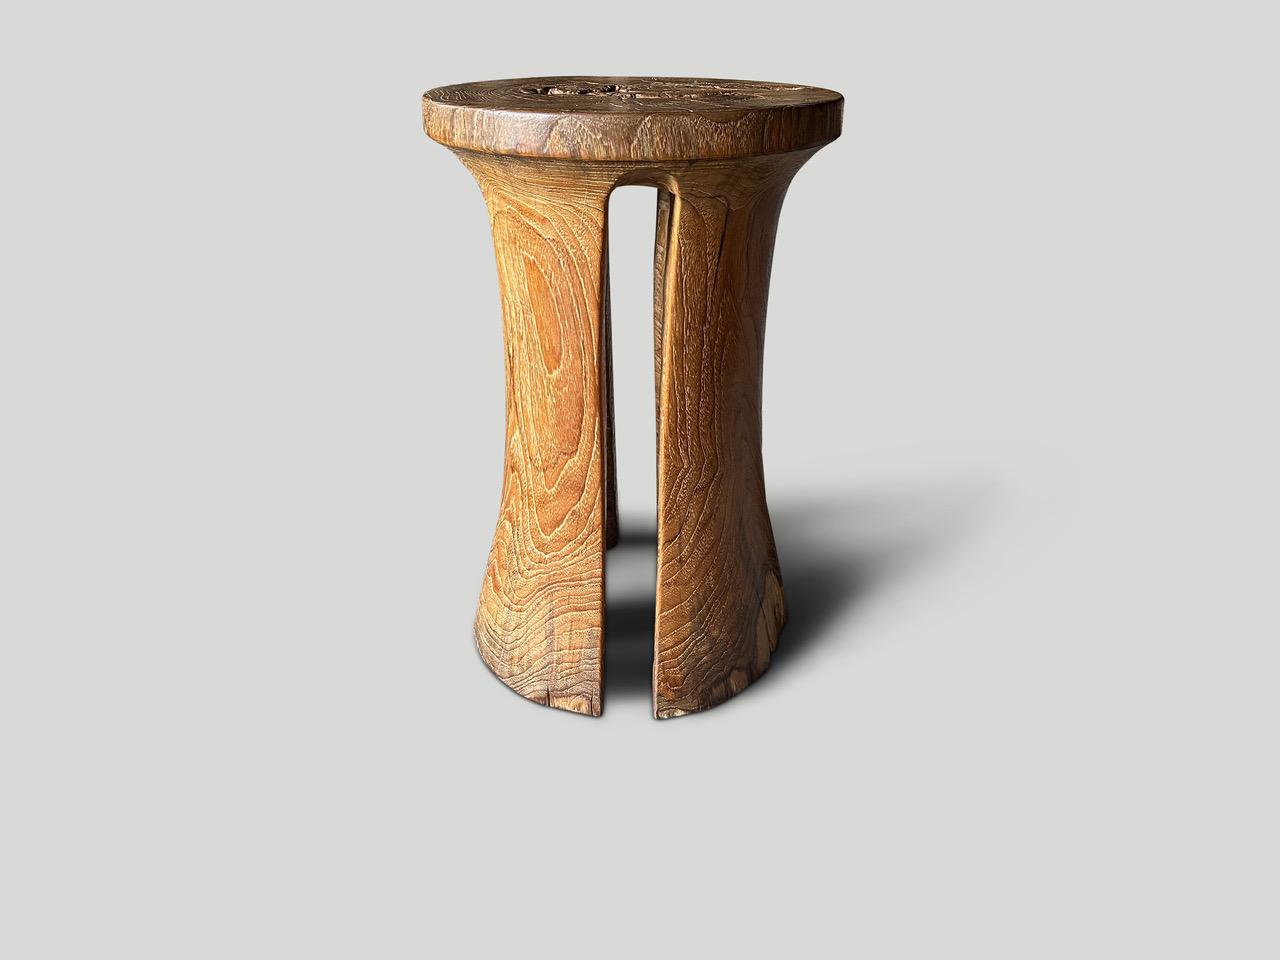 Minimalist Andrianna Shamaris Sculptural Teak Wood Side Table or Pedestal For Sale